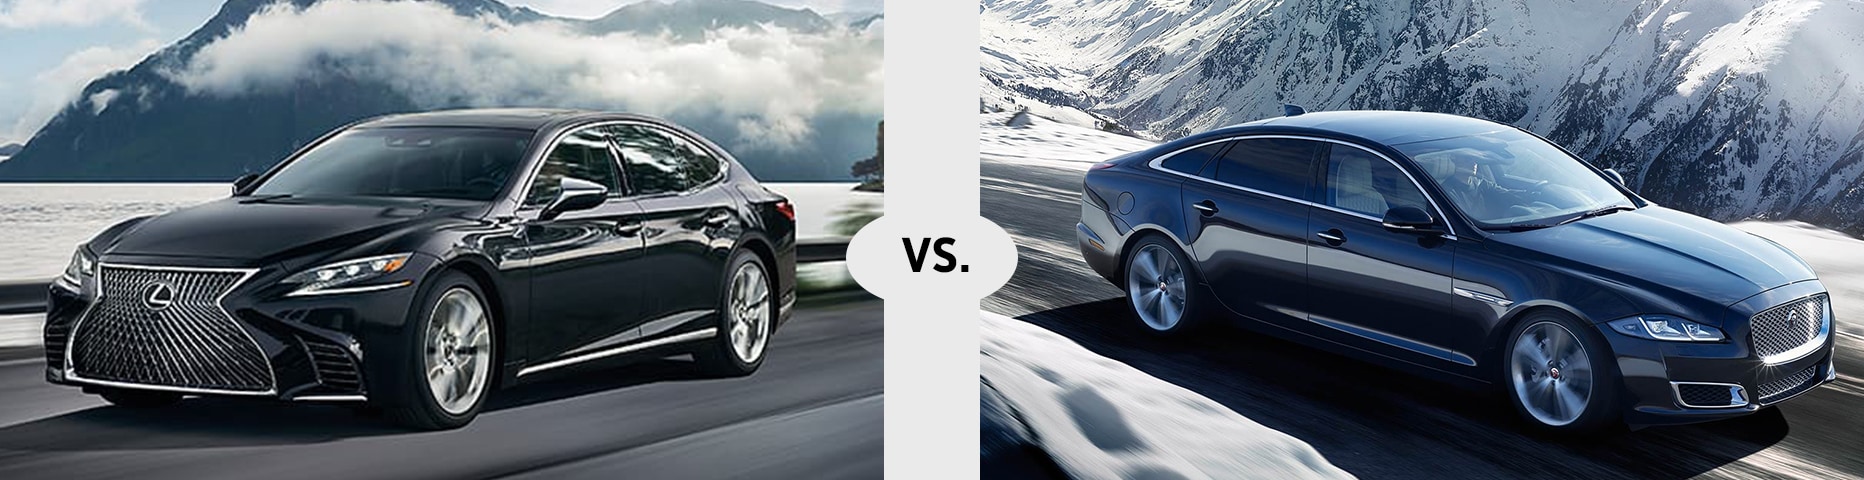 2020 Lexus LS vs. Jaguar XJ